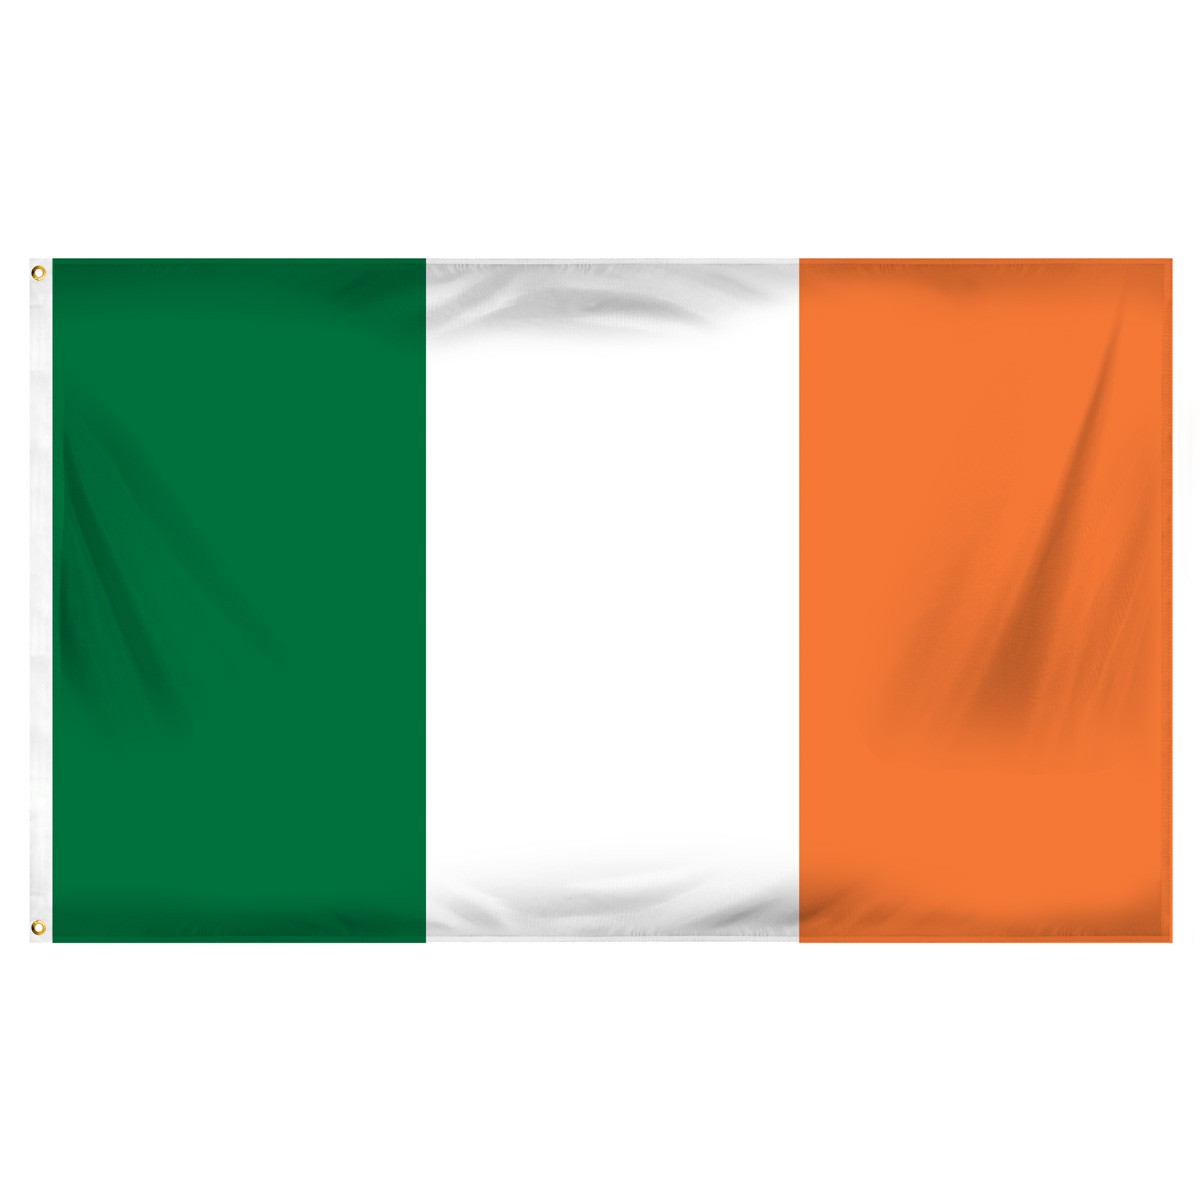 Ireland Flags - U.S. Flag Store